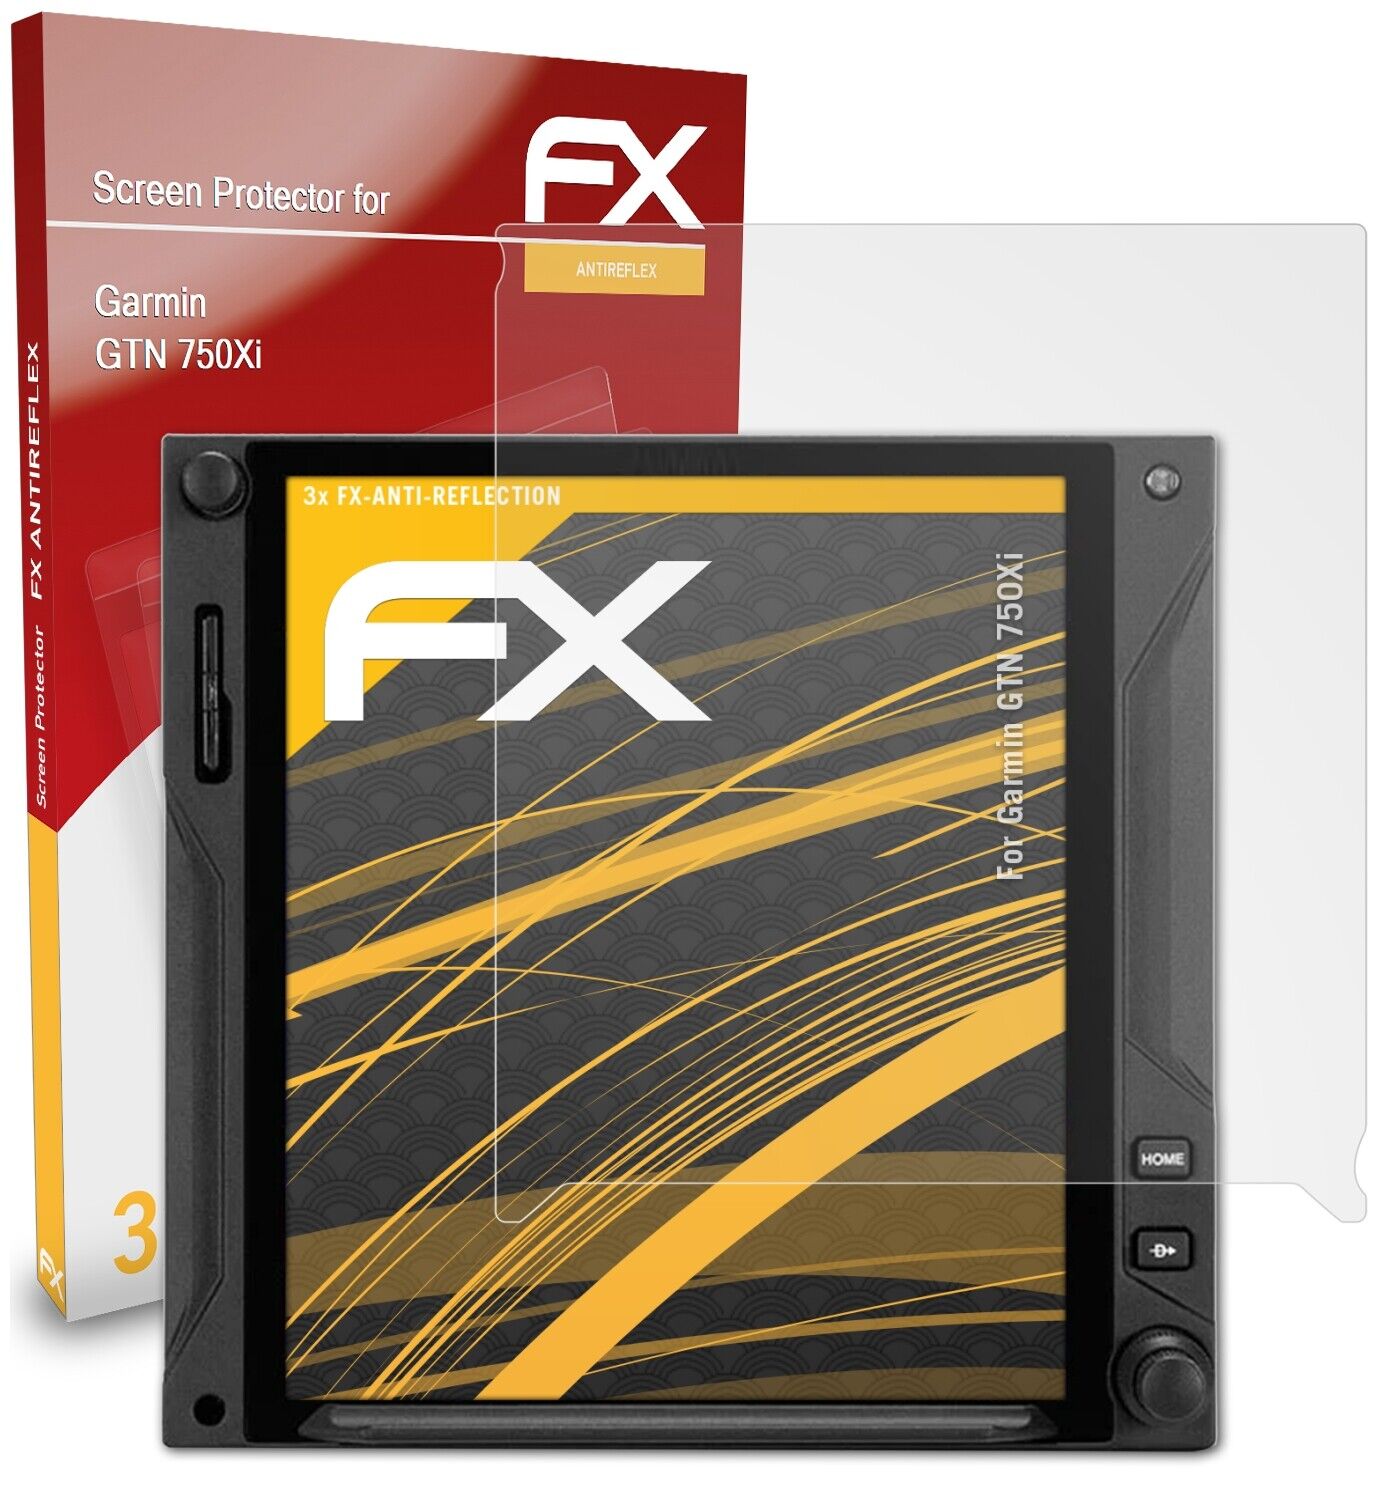 atFoliX 3x Screen Protection Film for Garmin GTN 750Xi matt&shockproof